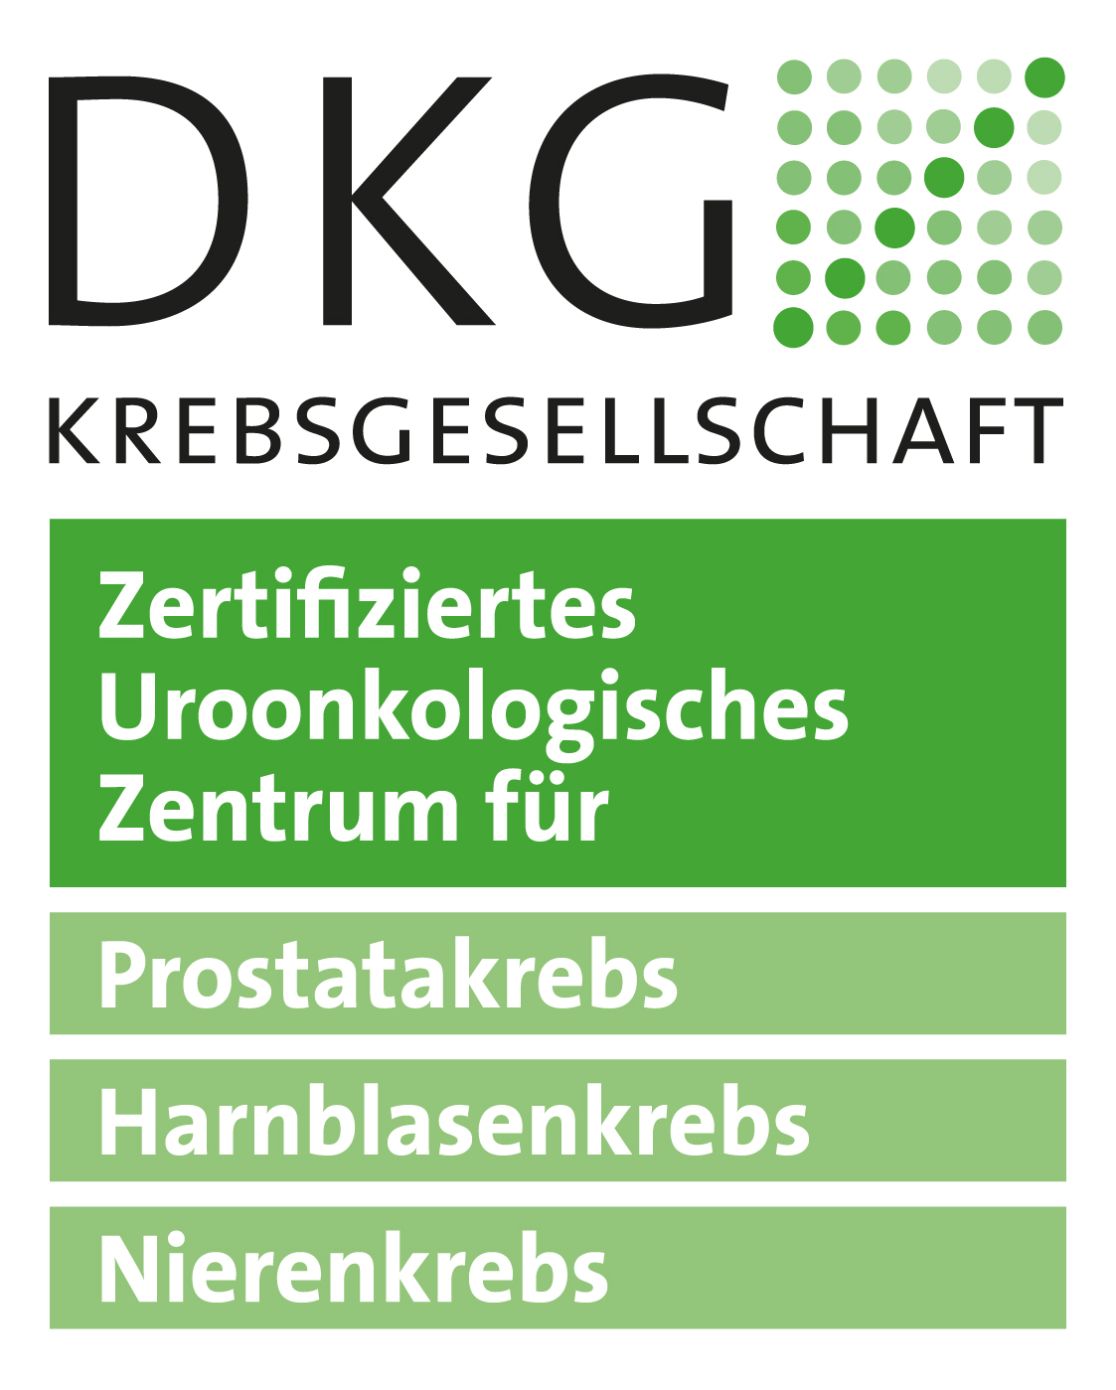 Zertifikat DKG